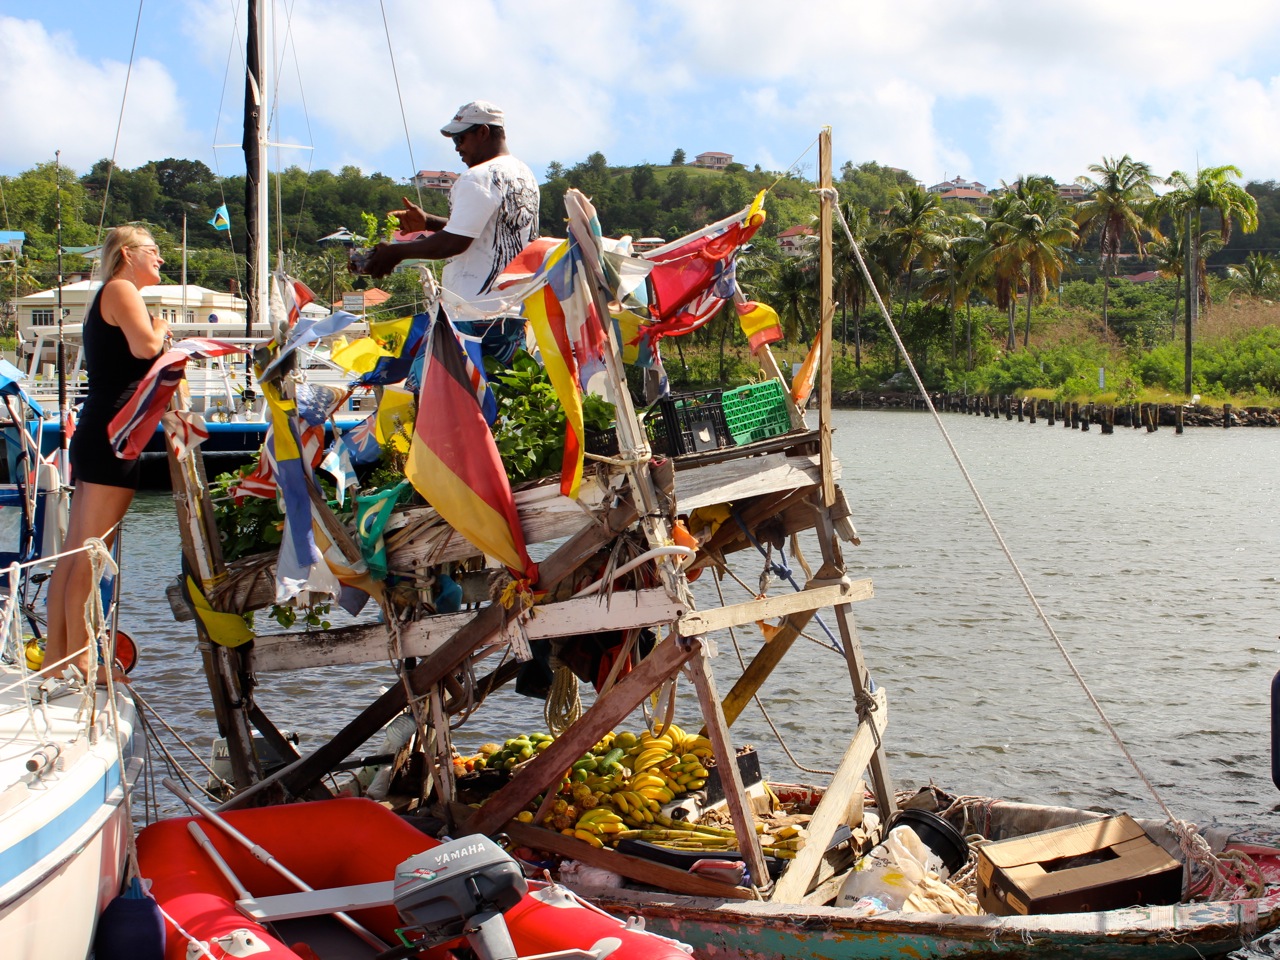 Gregory kommer forbi hver dag med frisk frugt og kokosnødder, både når vi ligger for anker og i havnen. Han har selv bygget båden.